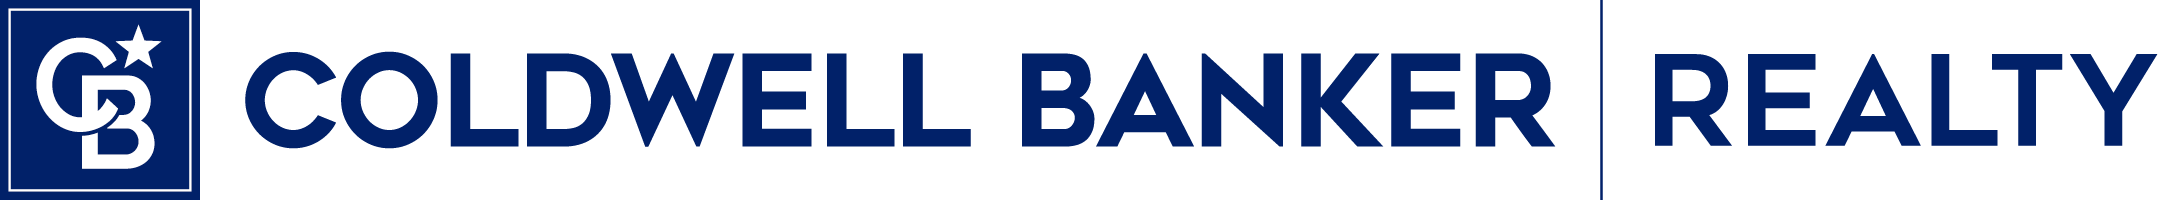 Header Coldwell Banker Realty Logo 2020